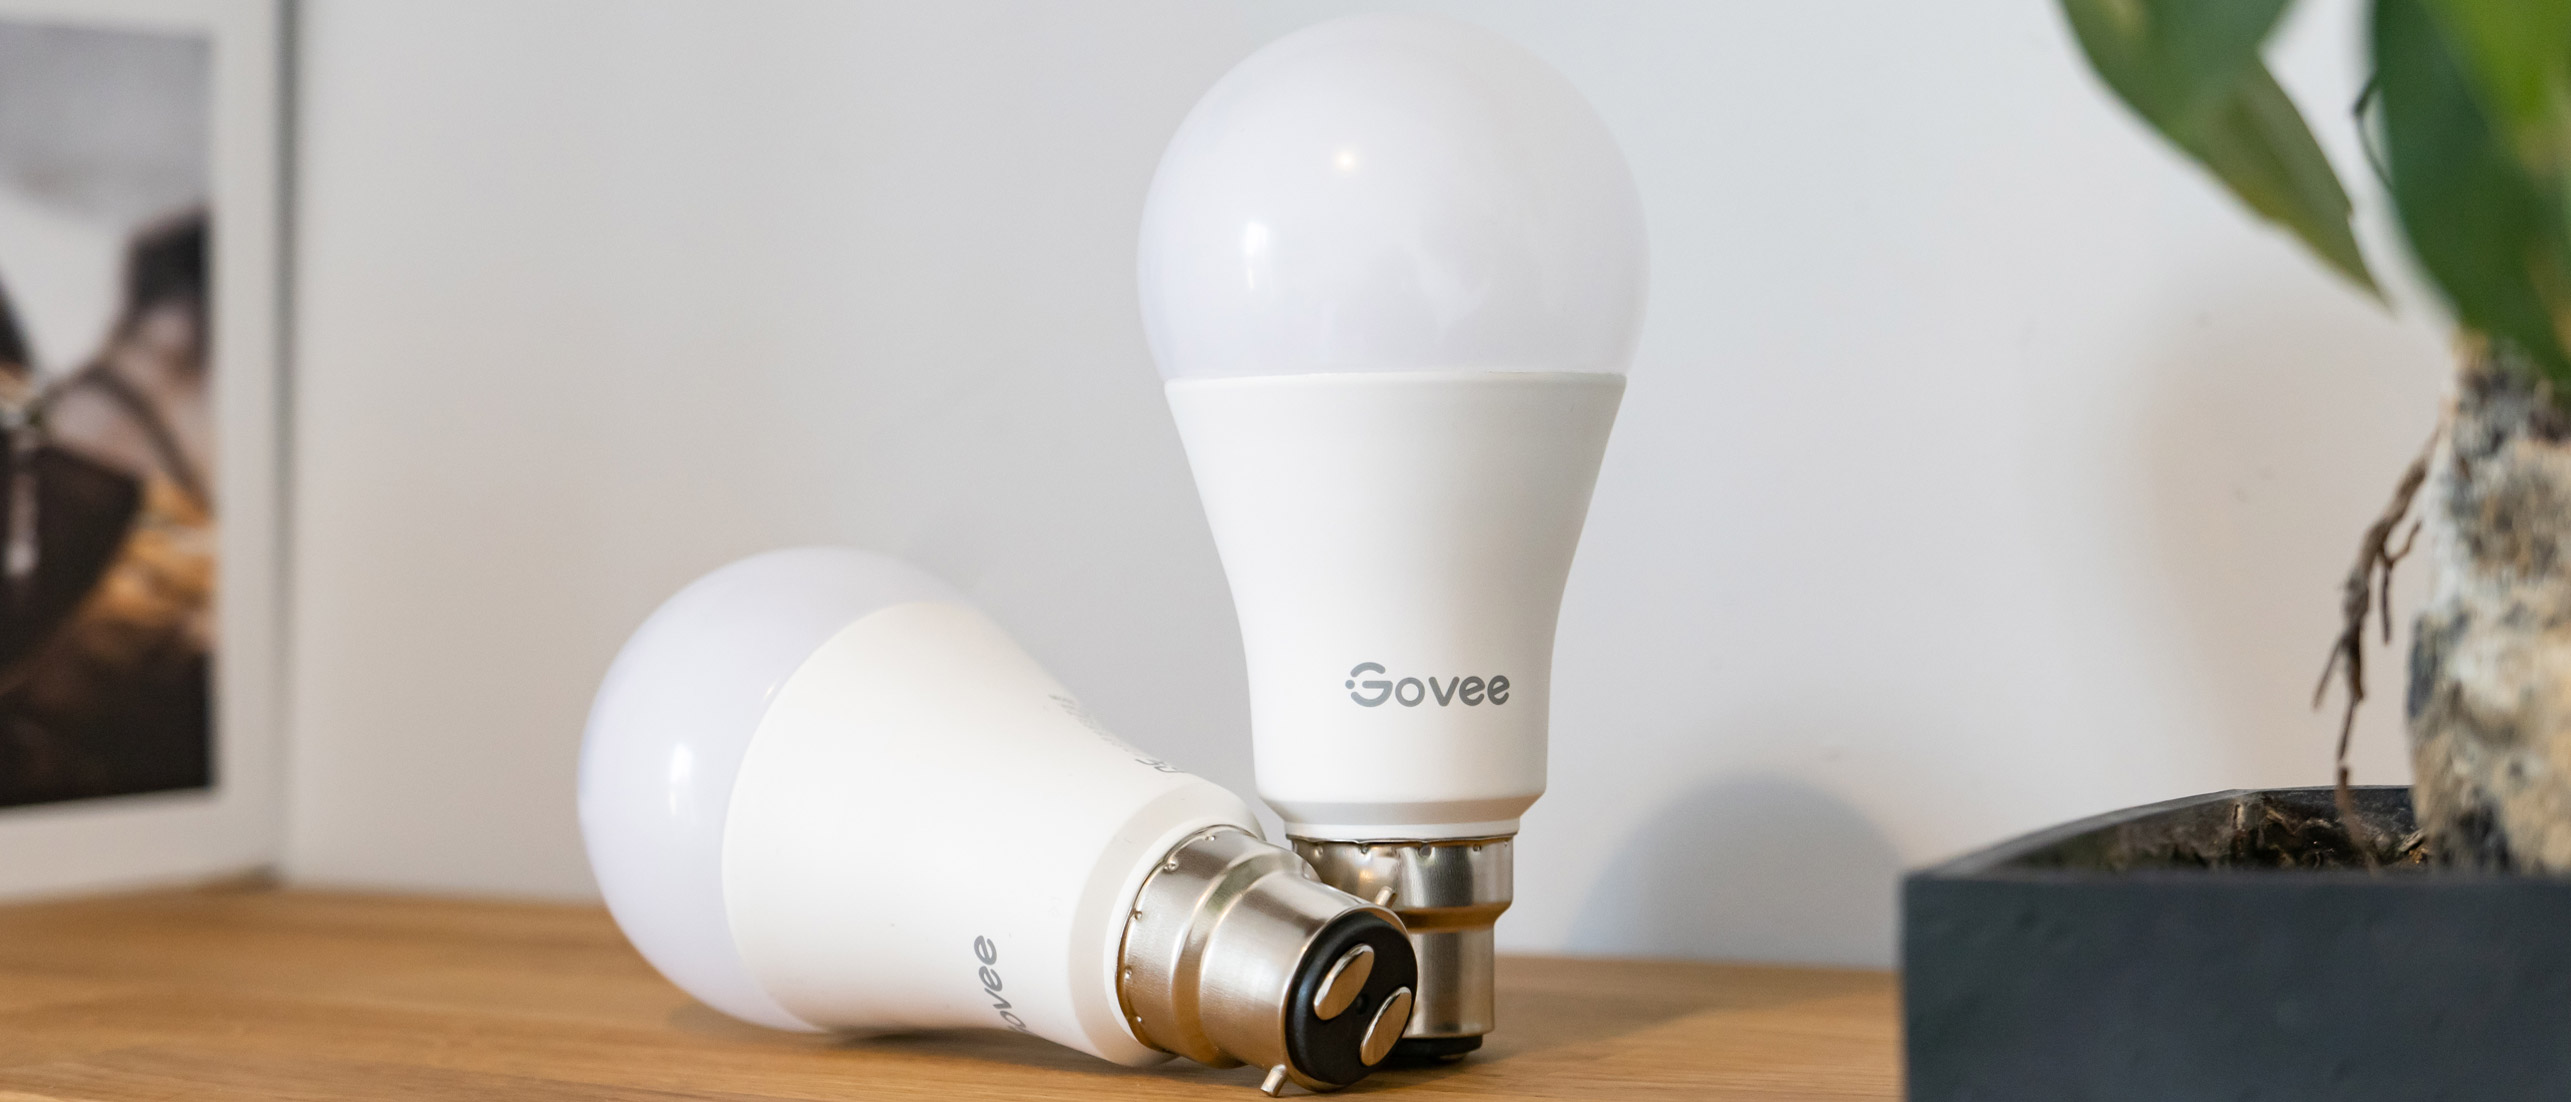 Govee Wi-Fi LED Bulb review